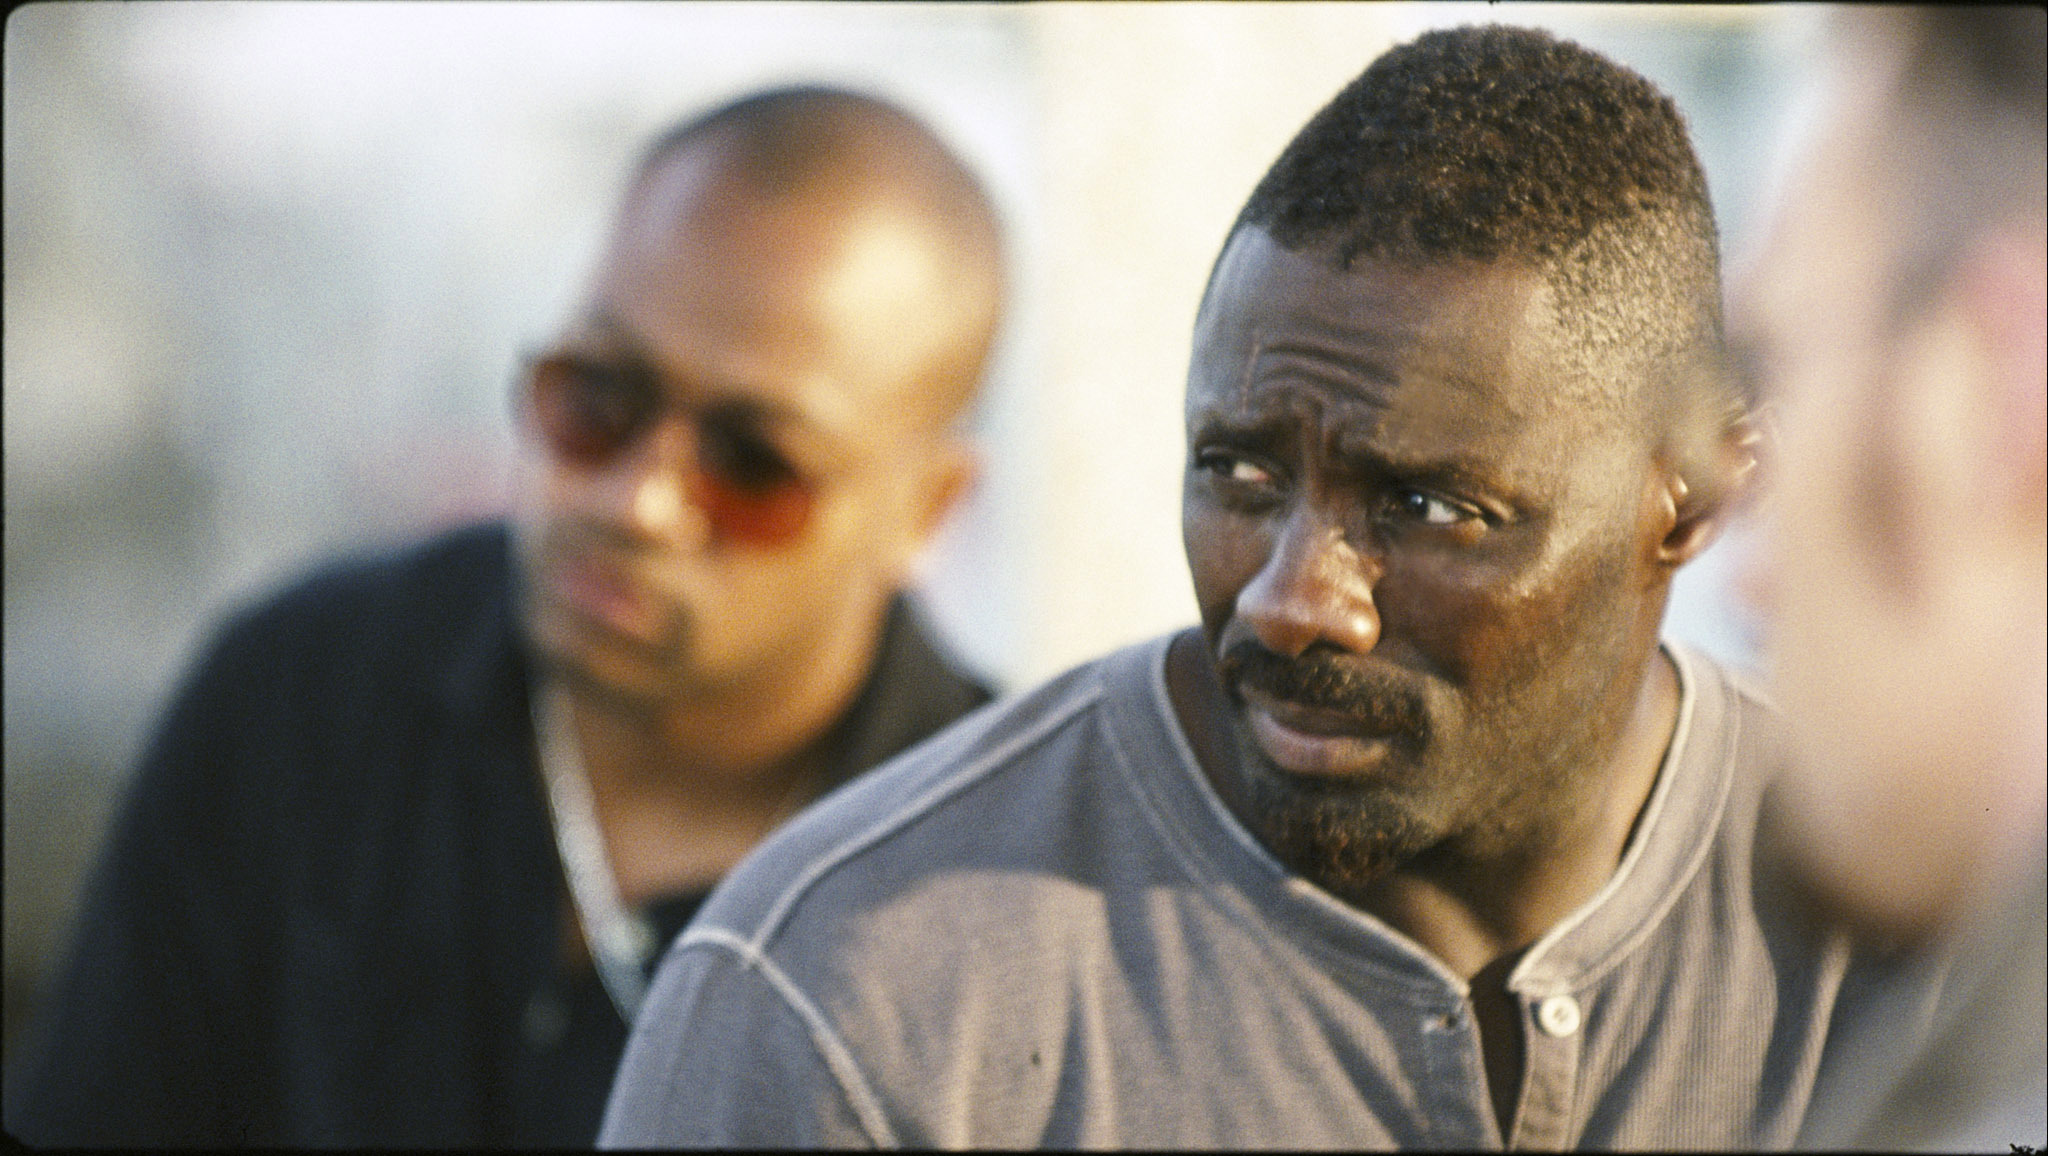 Still of Idris Elba in The Losers (2010)